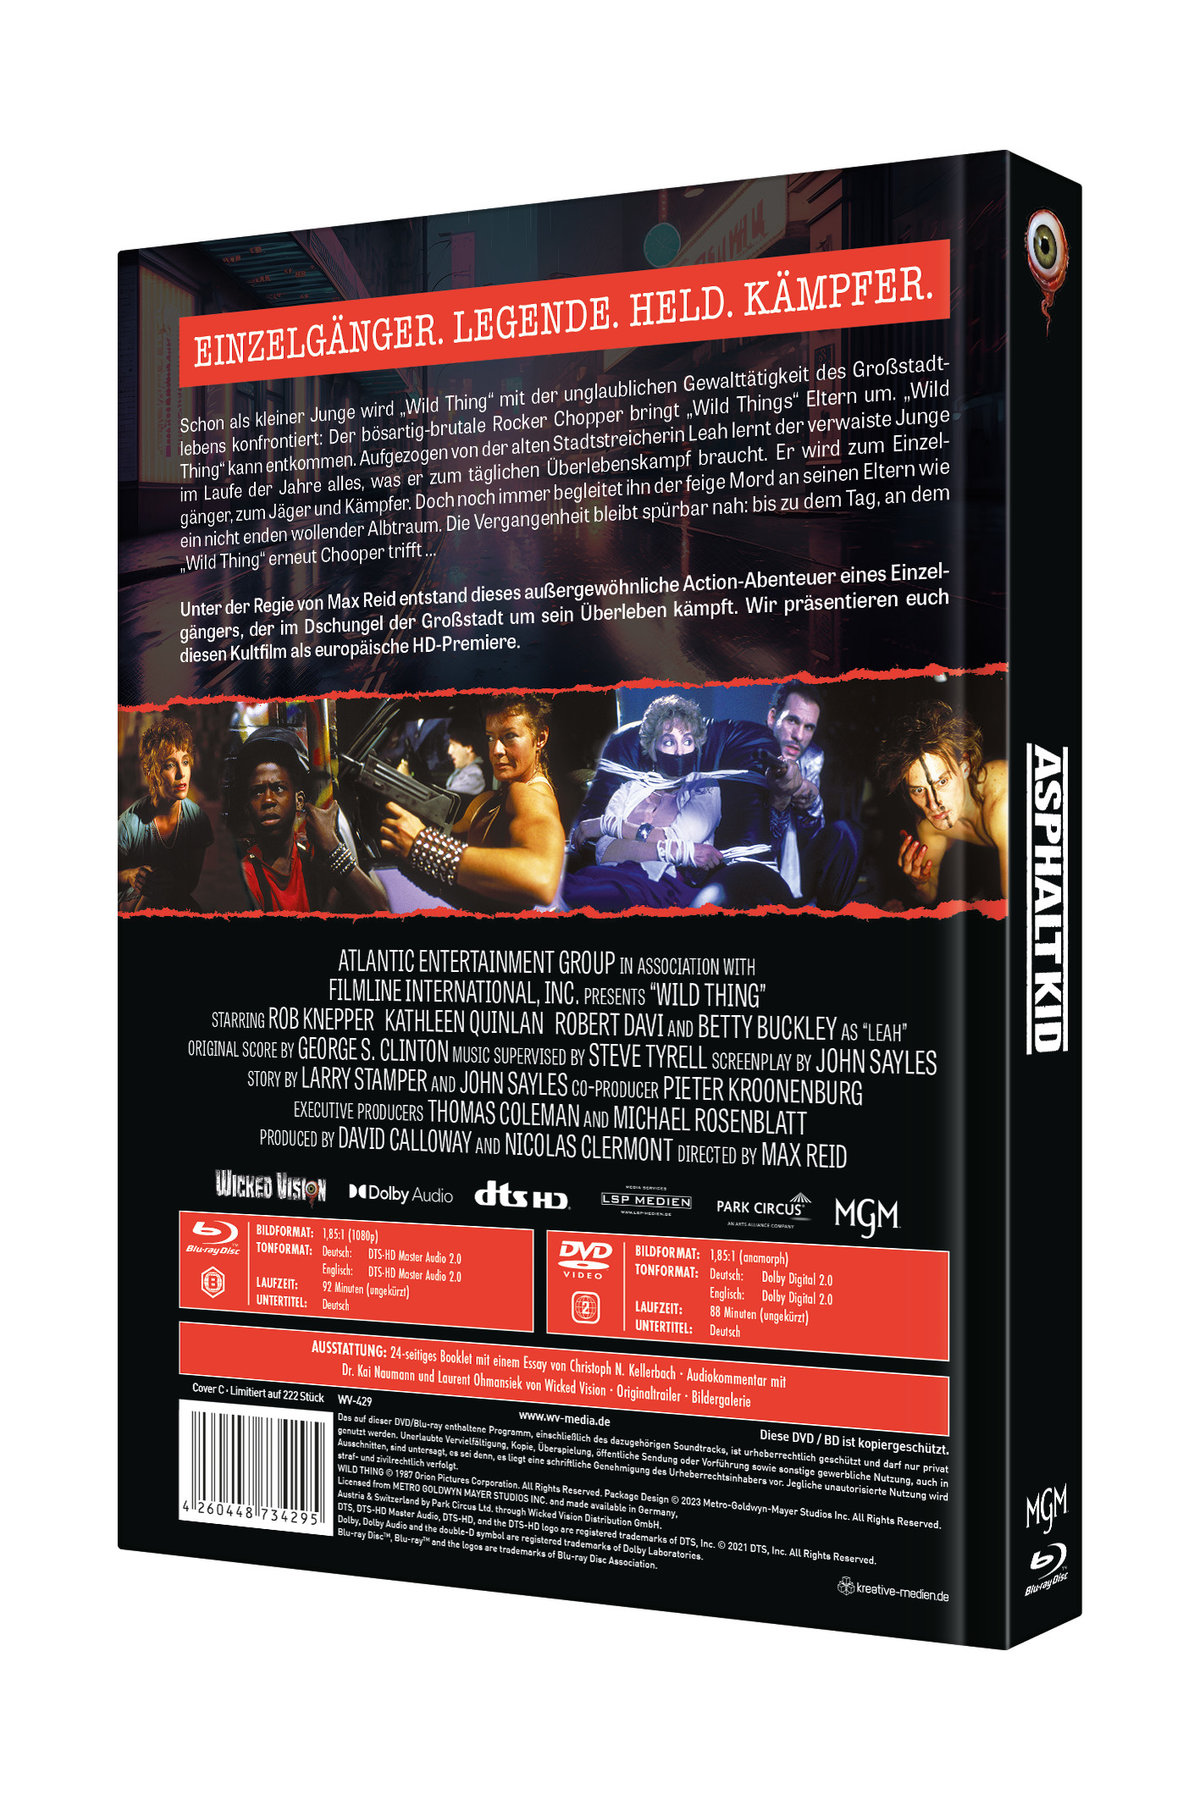 Asphalt Kid (Wild Thing) - Uncut Mediabook Edition  (DVD+blu-ray) (C)